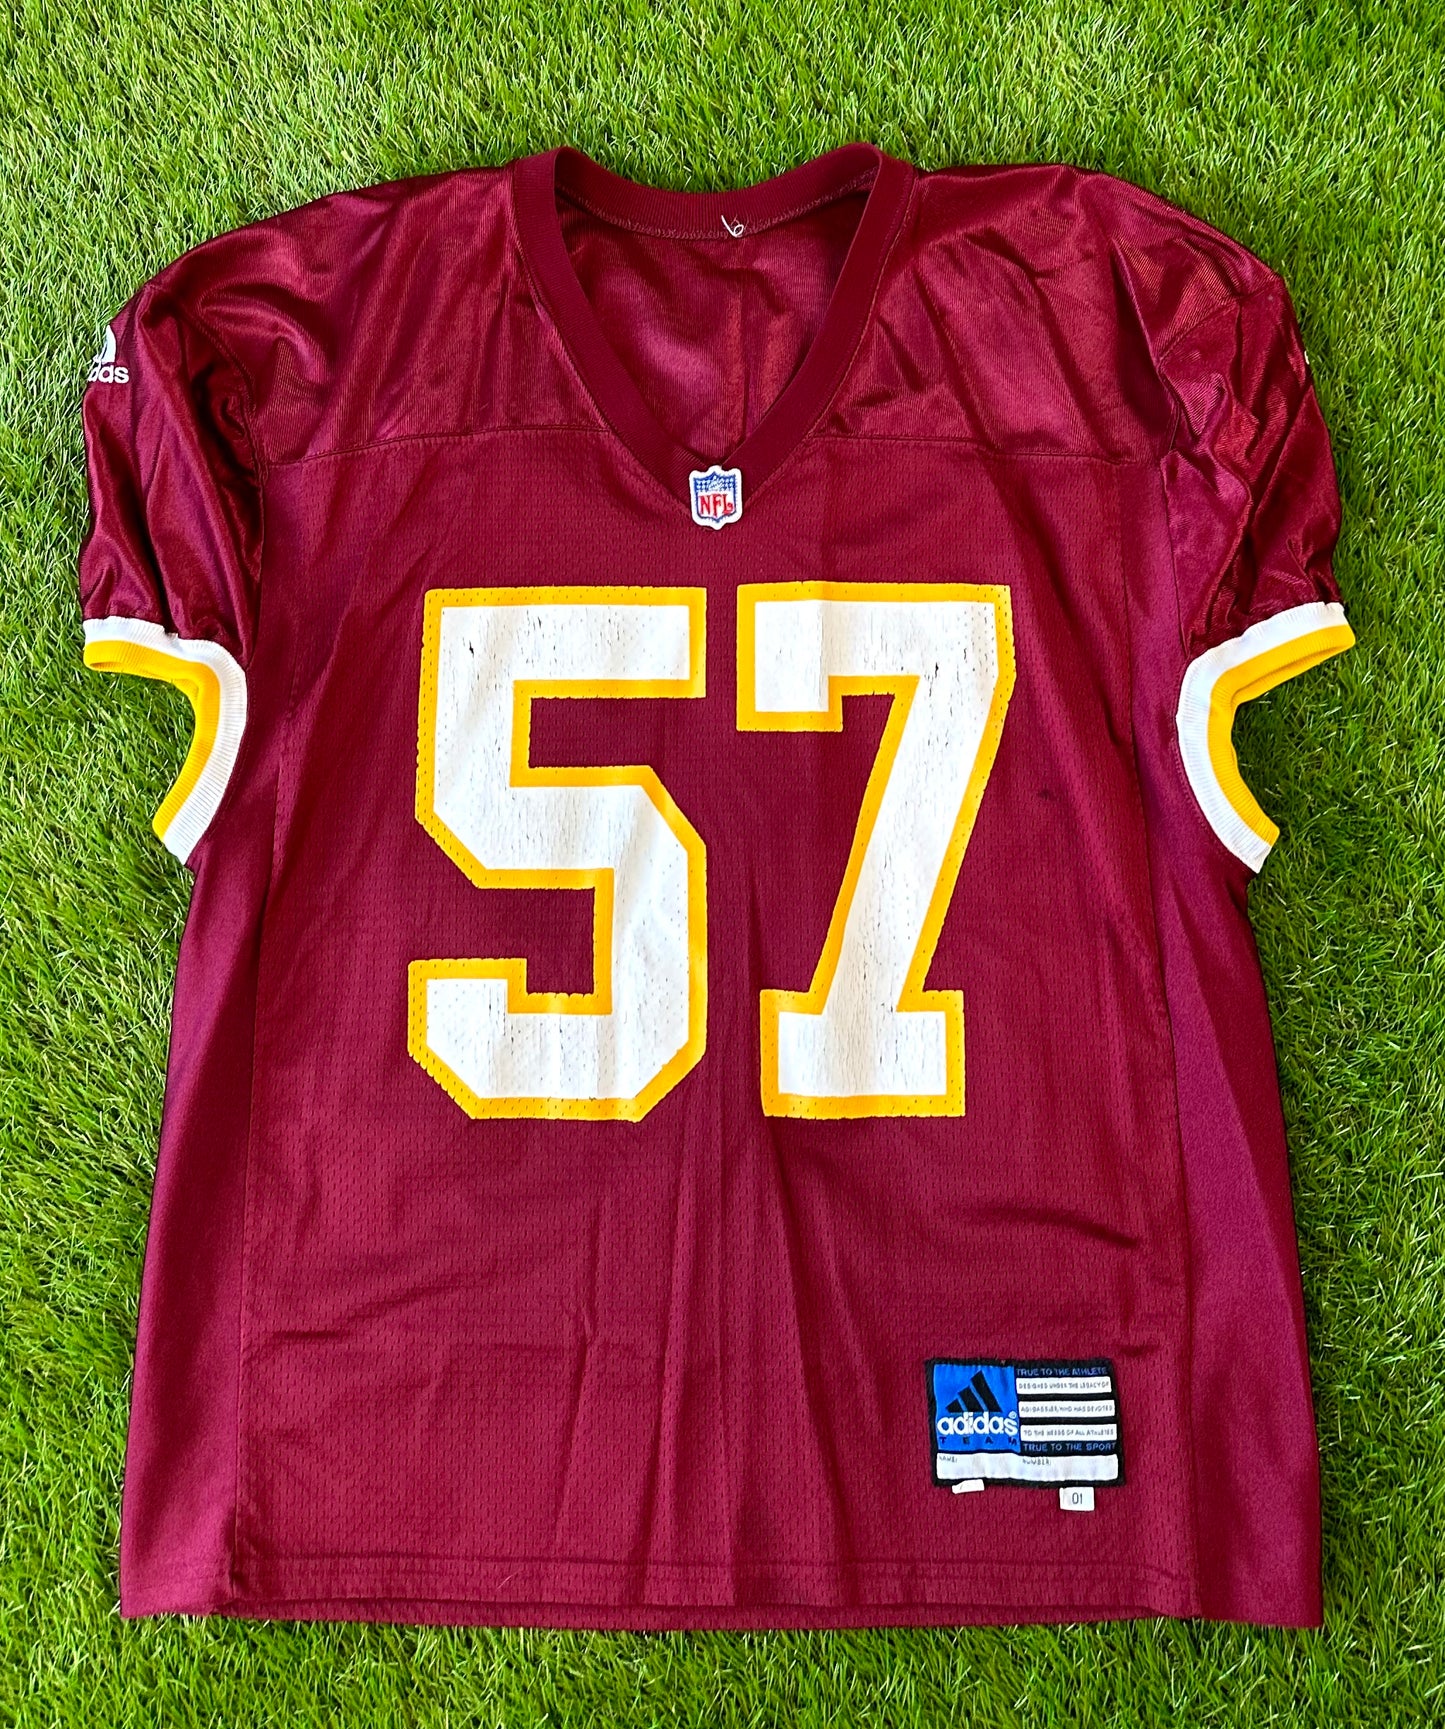 Washington Redskins 2000-2001 NFL Football Jersey (50/XL)